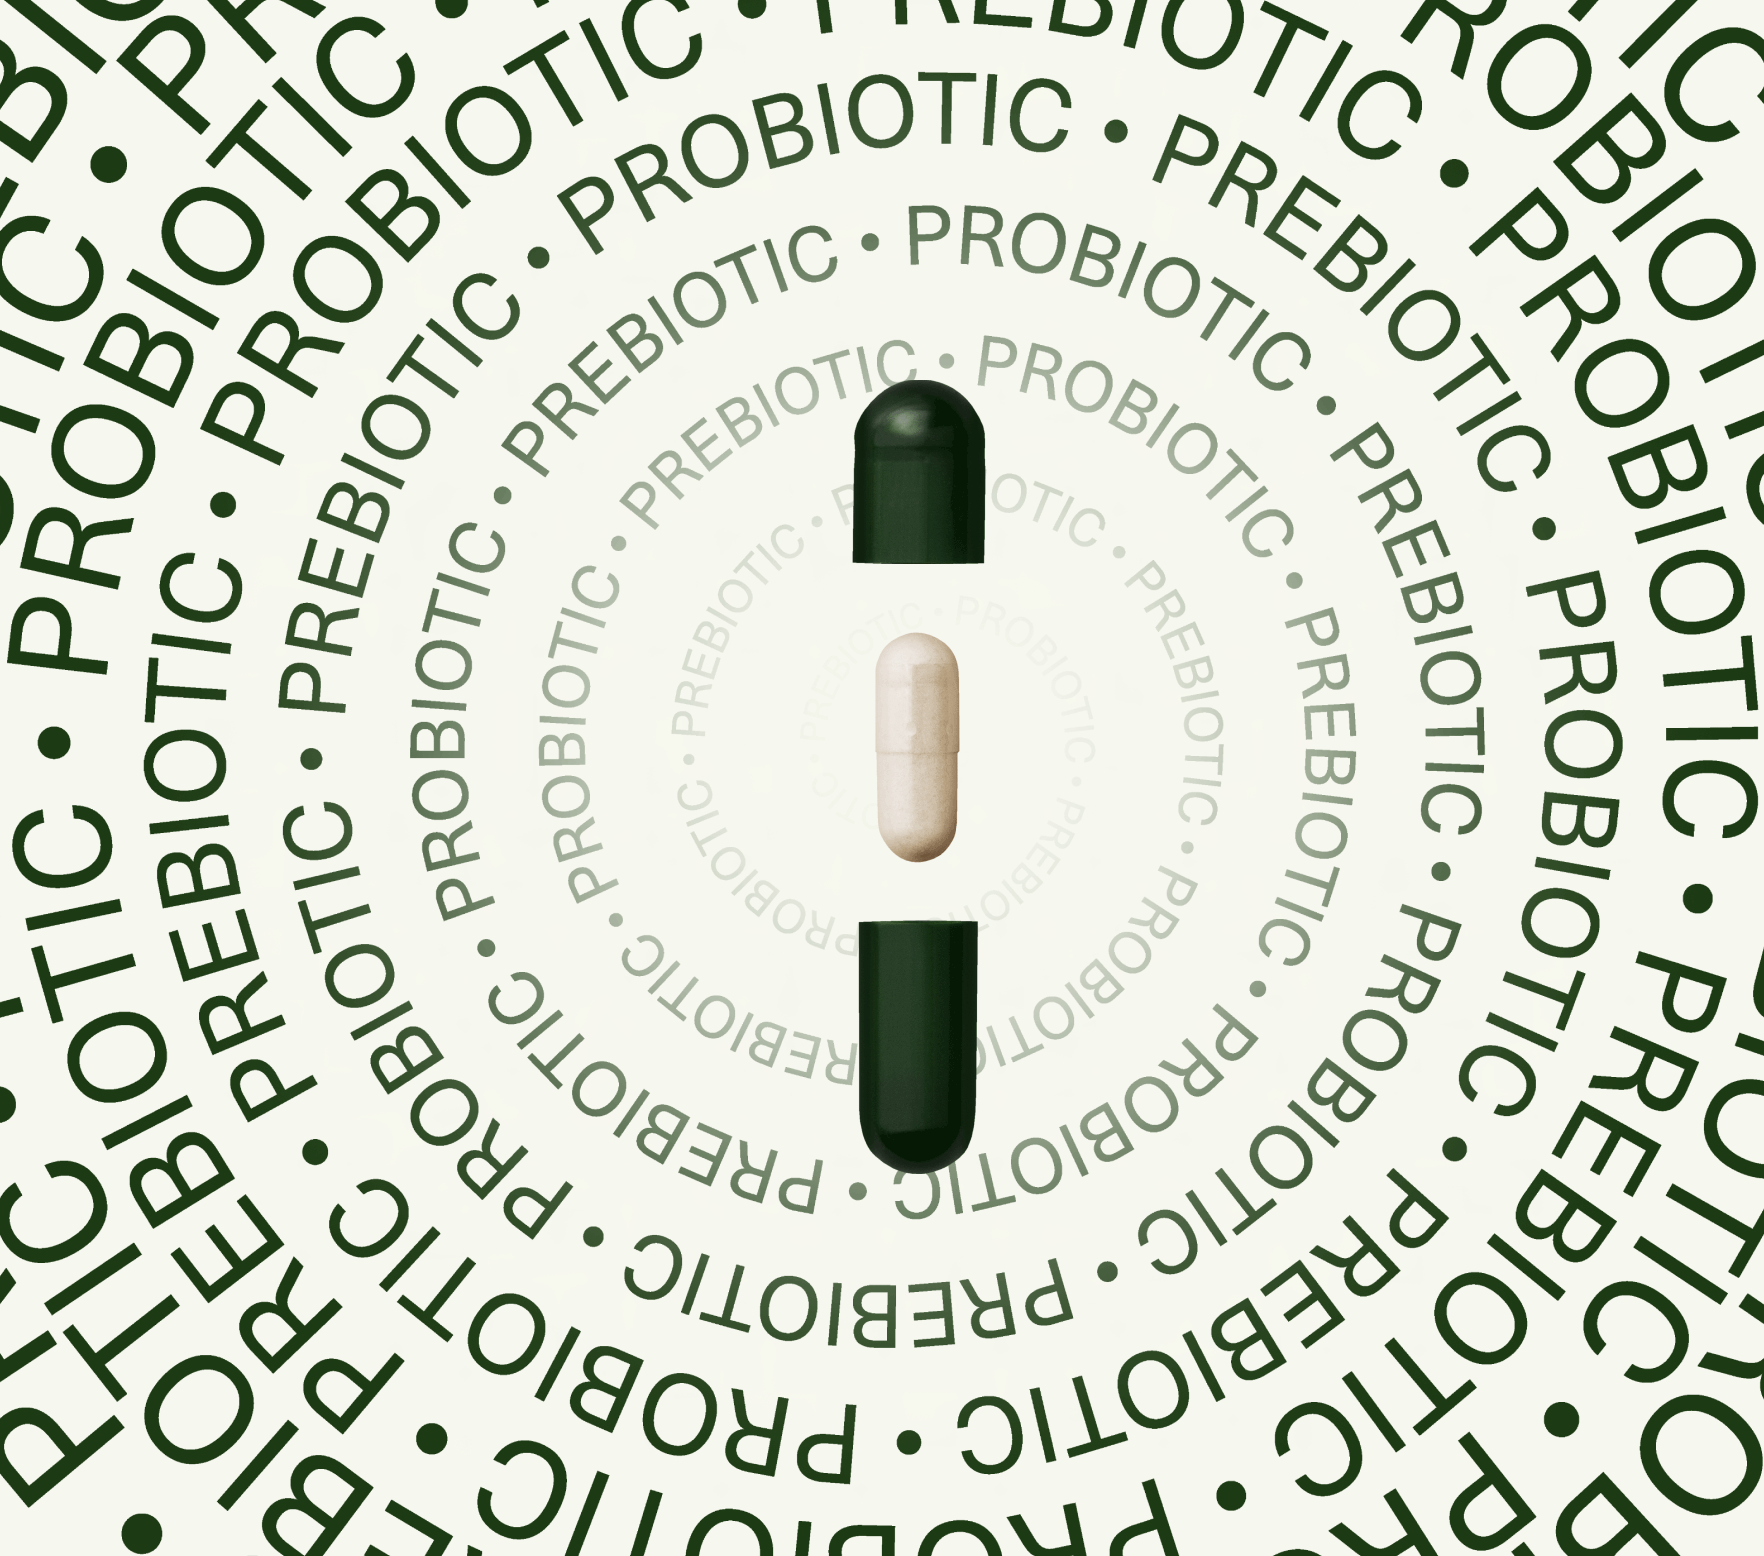 Prebiotics vs. Probiotics: What’s the Difference?